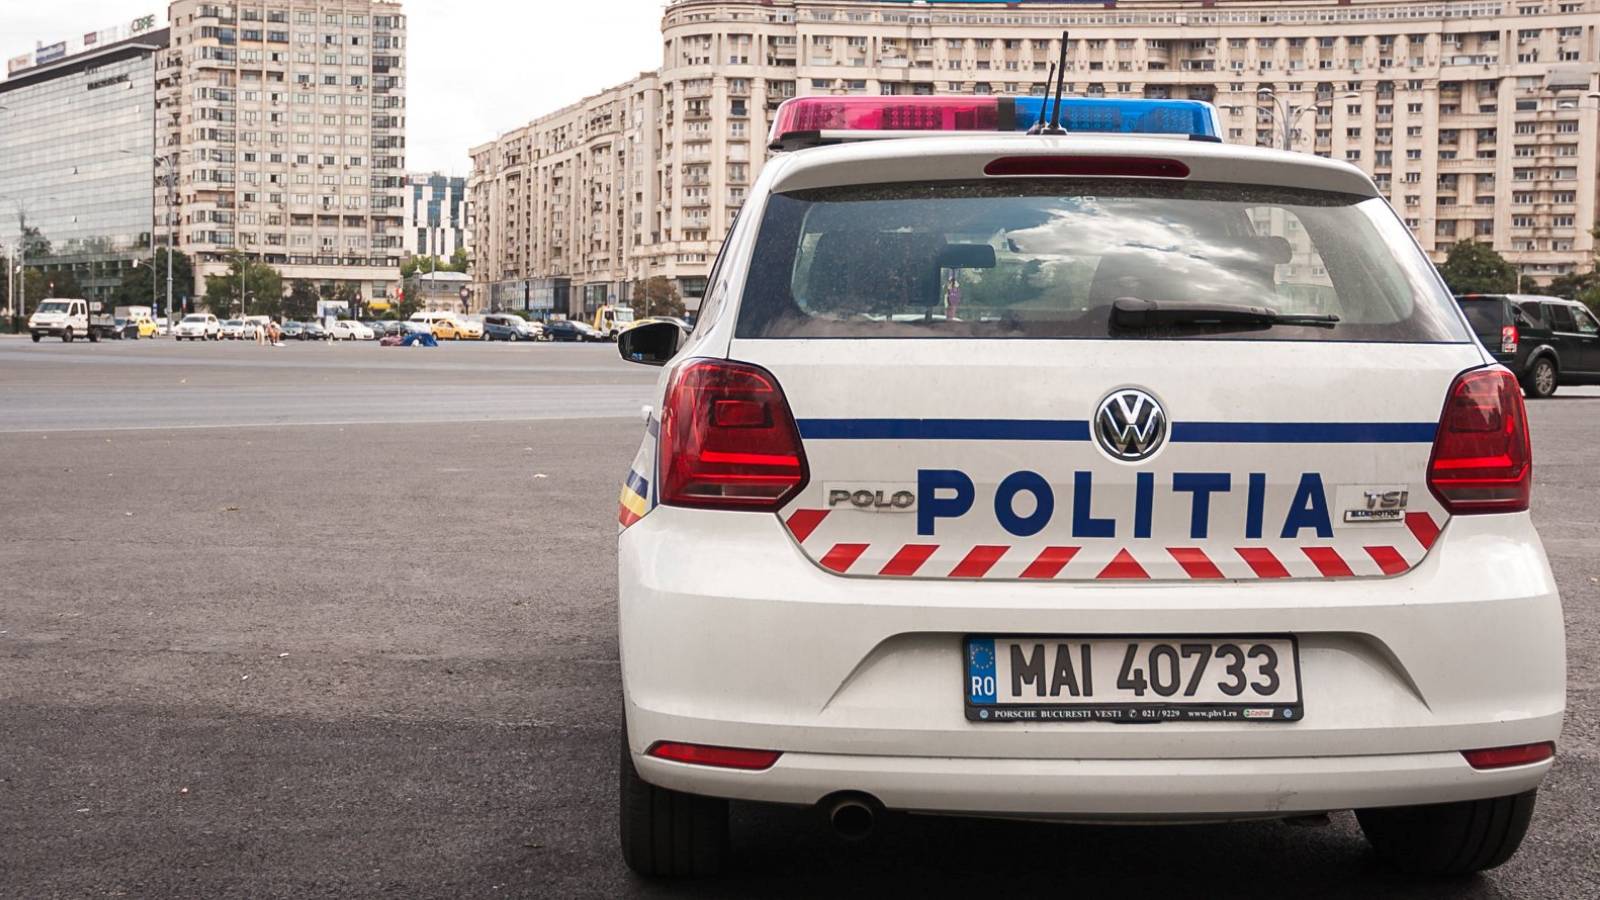 Rumænsk politi advarer mod falske politibetjente